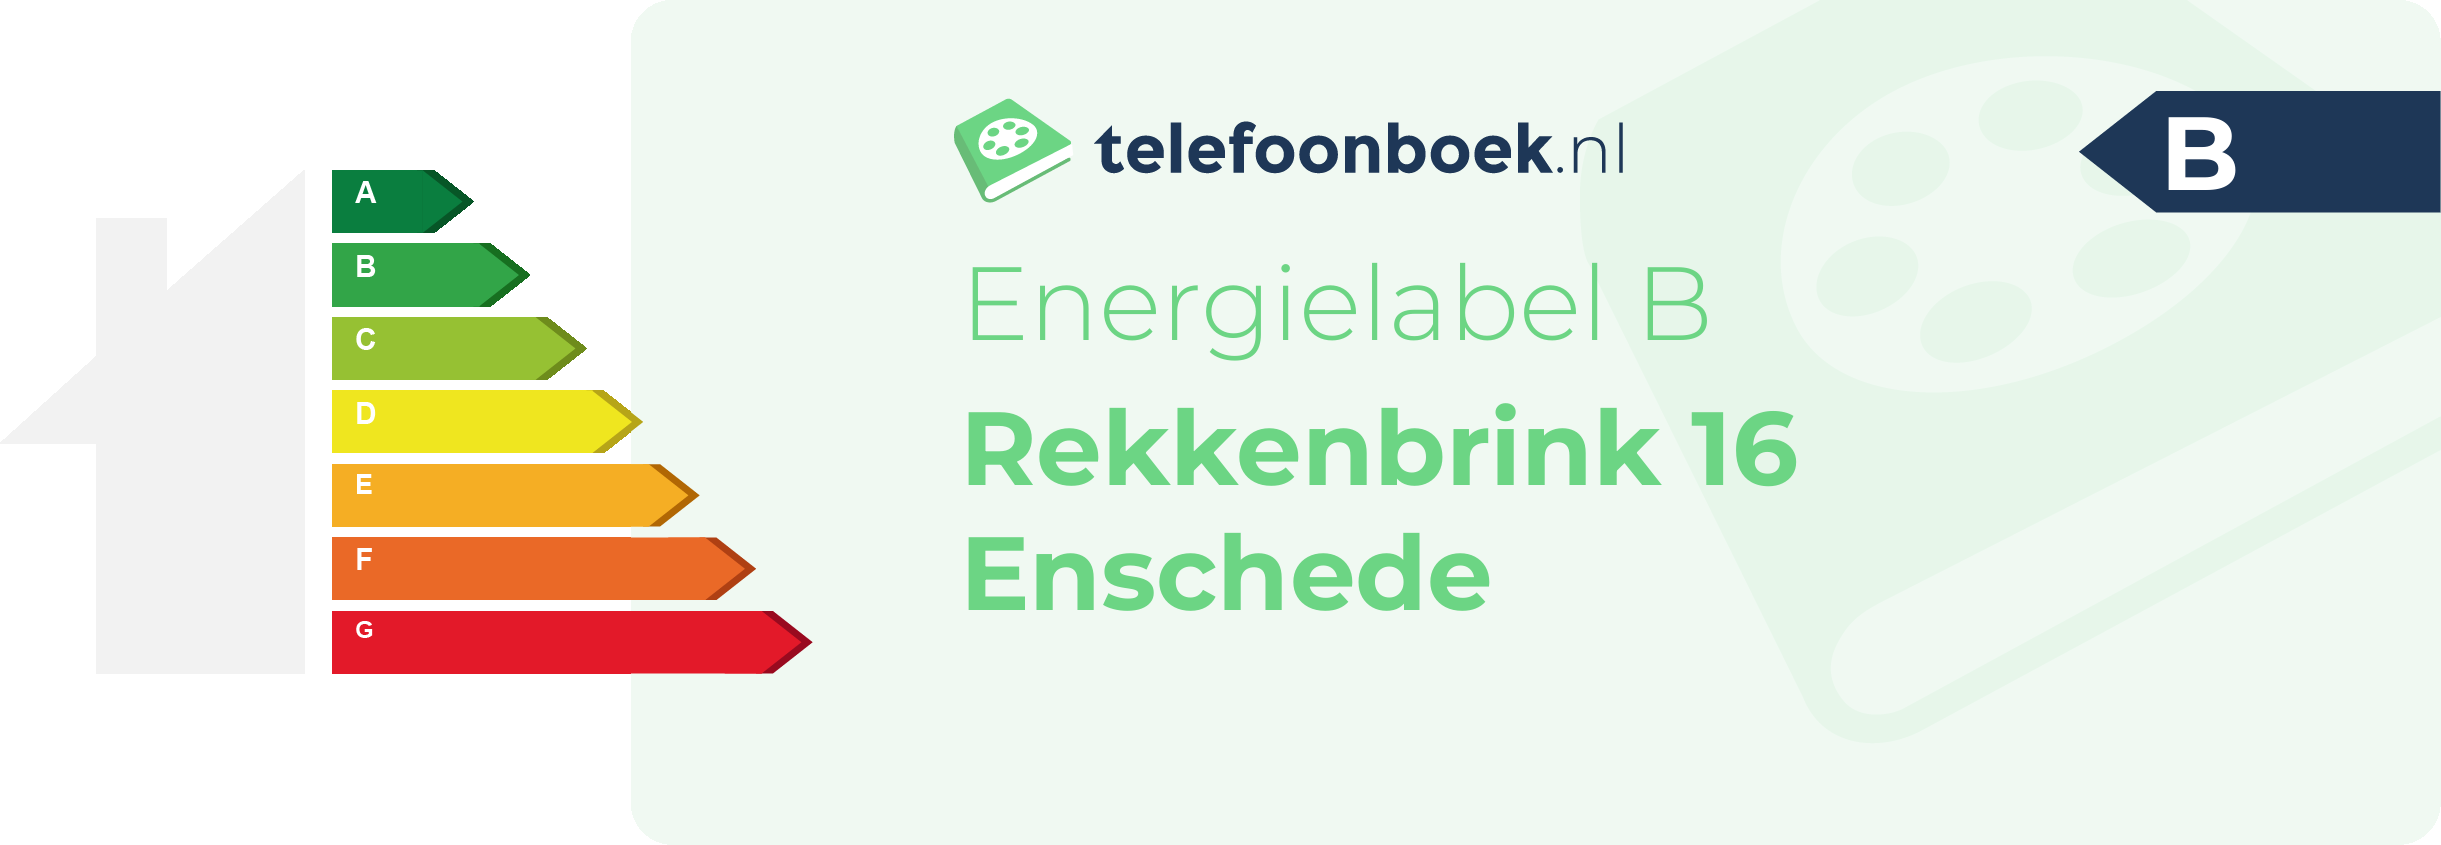 Energielabel Rekkenbrink 16 Enschede